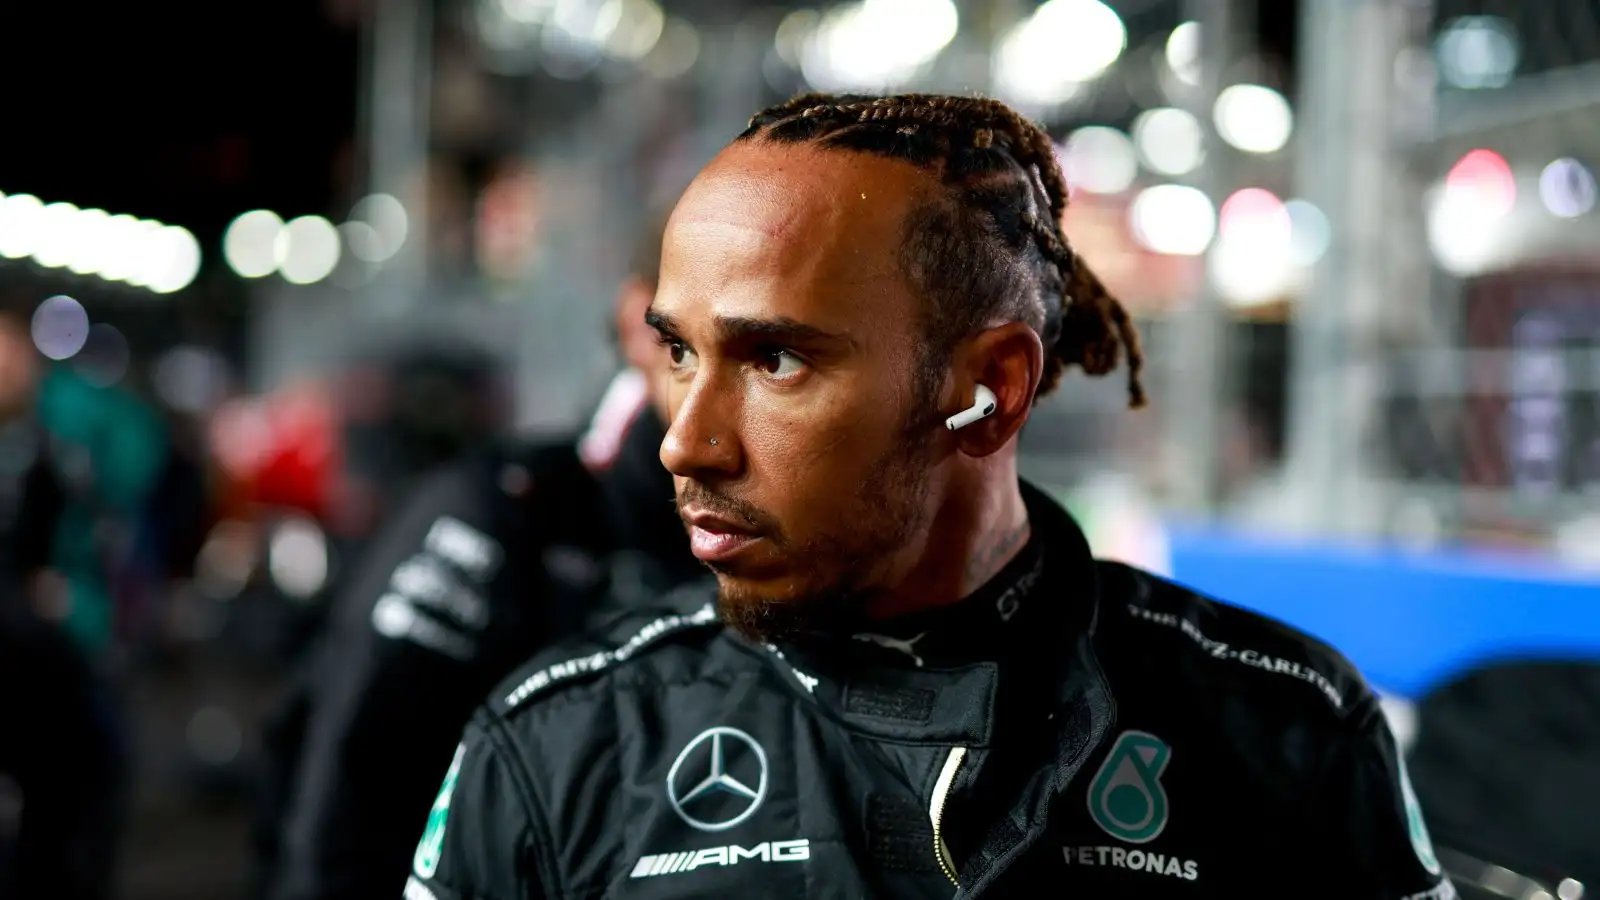 Mercedes driver Lewis Hamilton looking serious in Las Vegas.